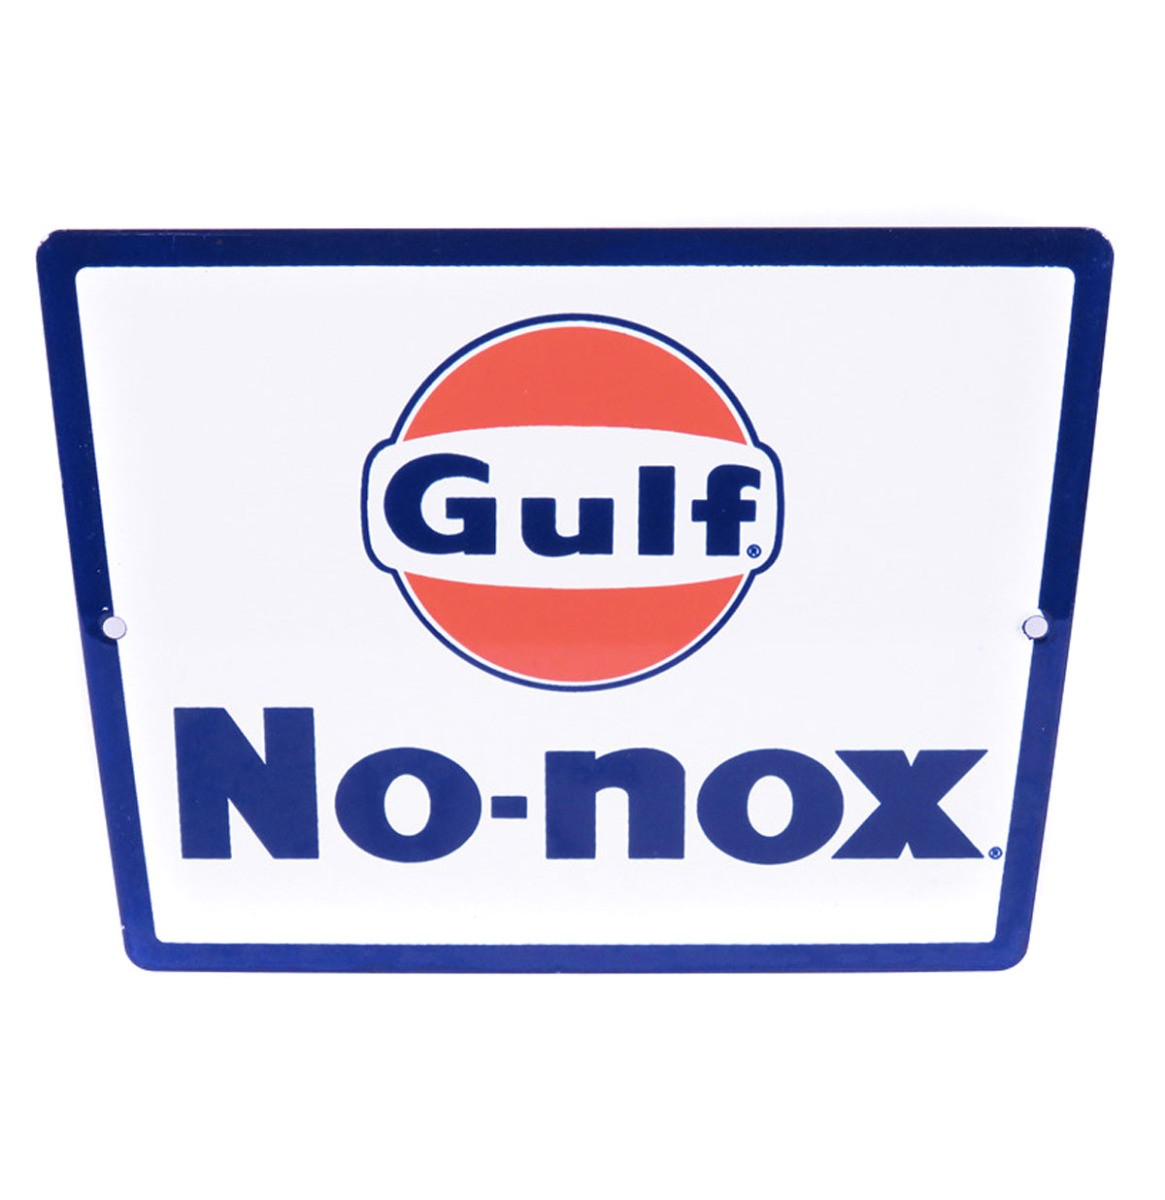 Gulf No-Nox Emaille Bord - 28 x 22 cm